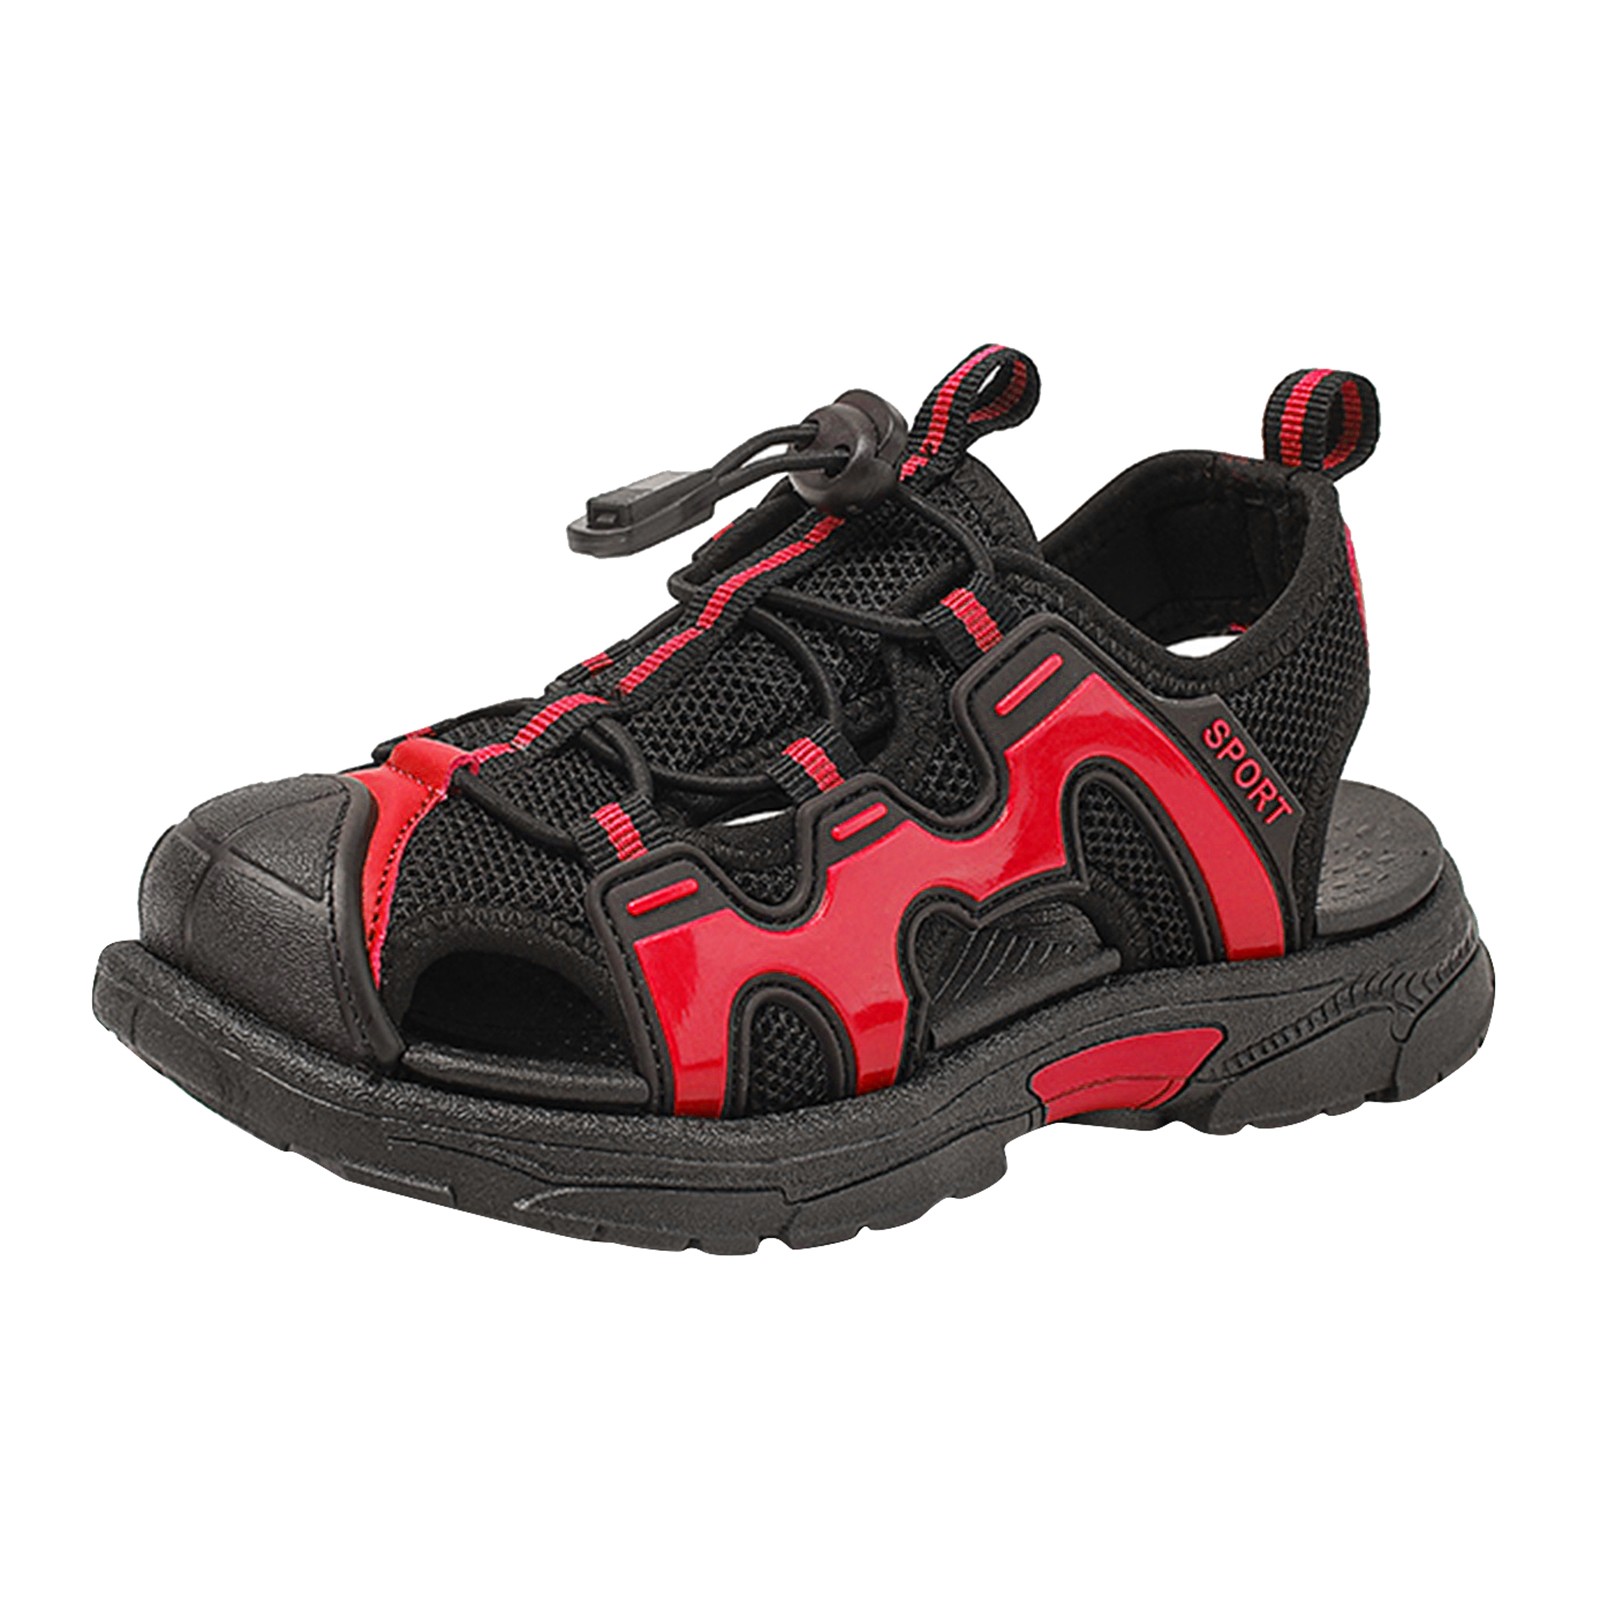 Tween Boys Sport Sandals Closed-Toe Slip On Athletic Sandals Outdoor ...